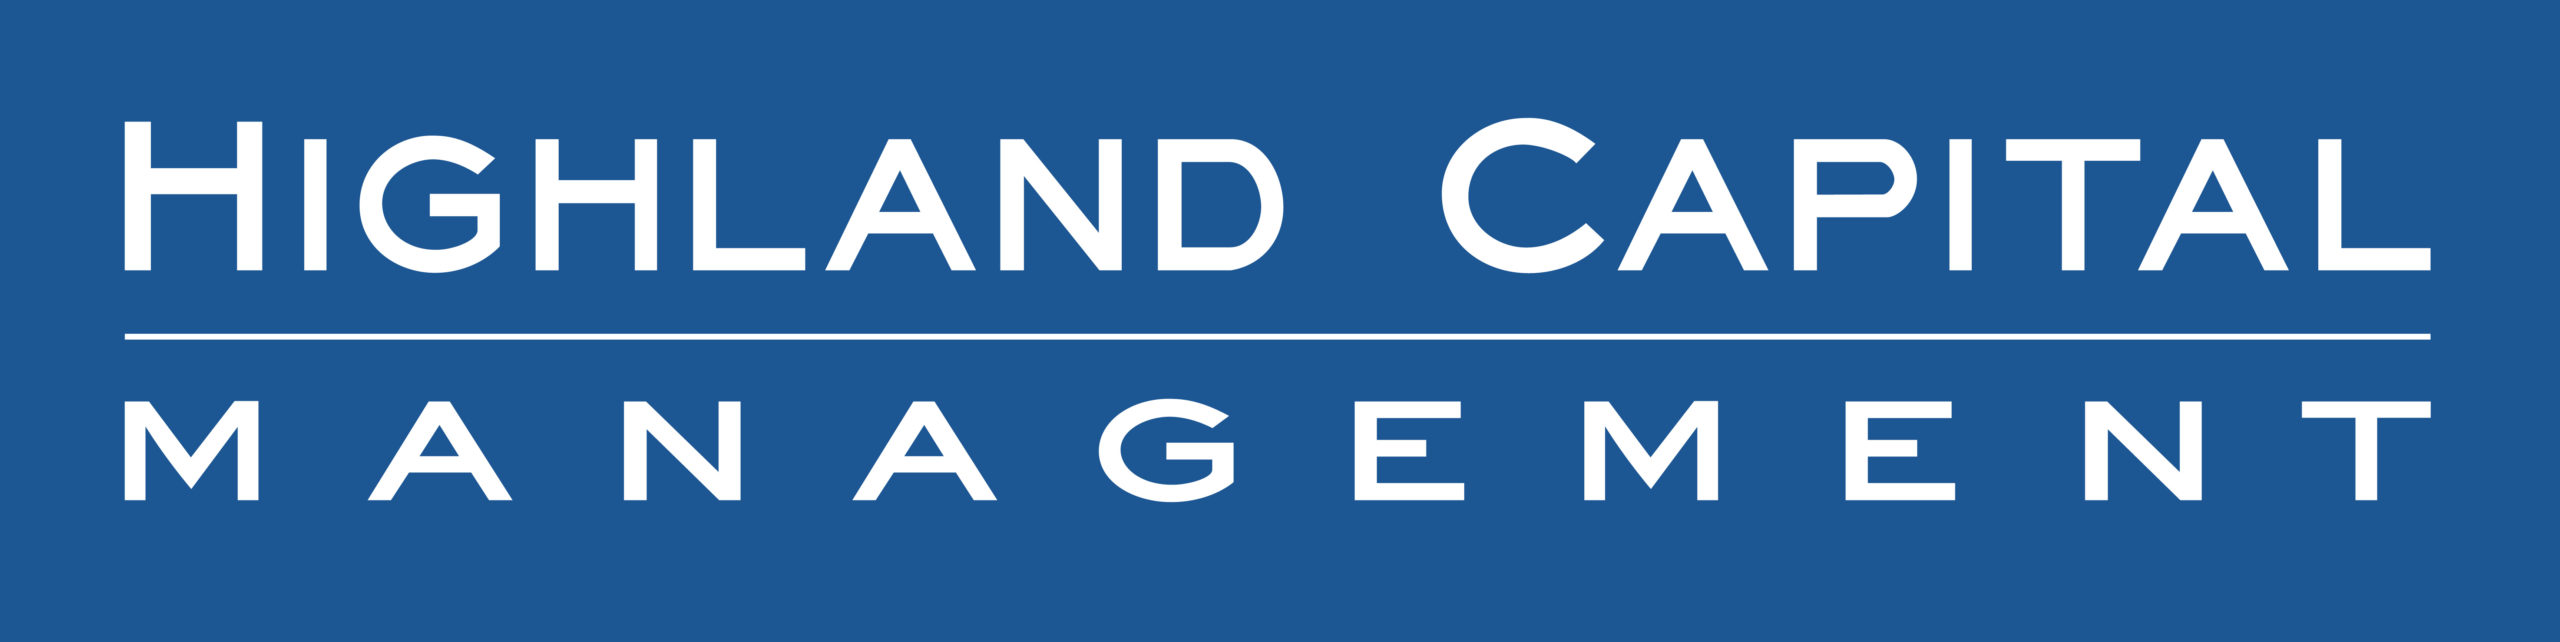 Highland Capital Management